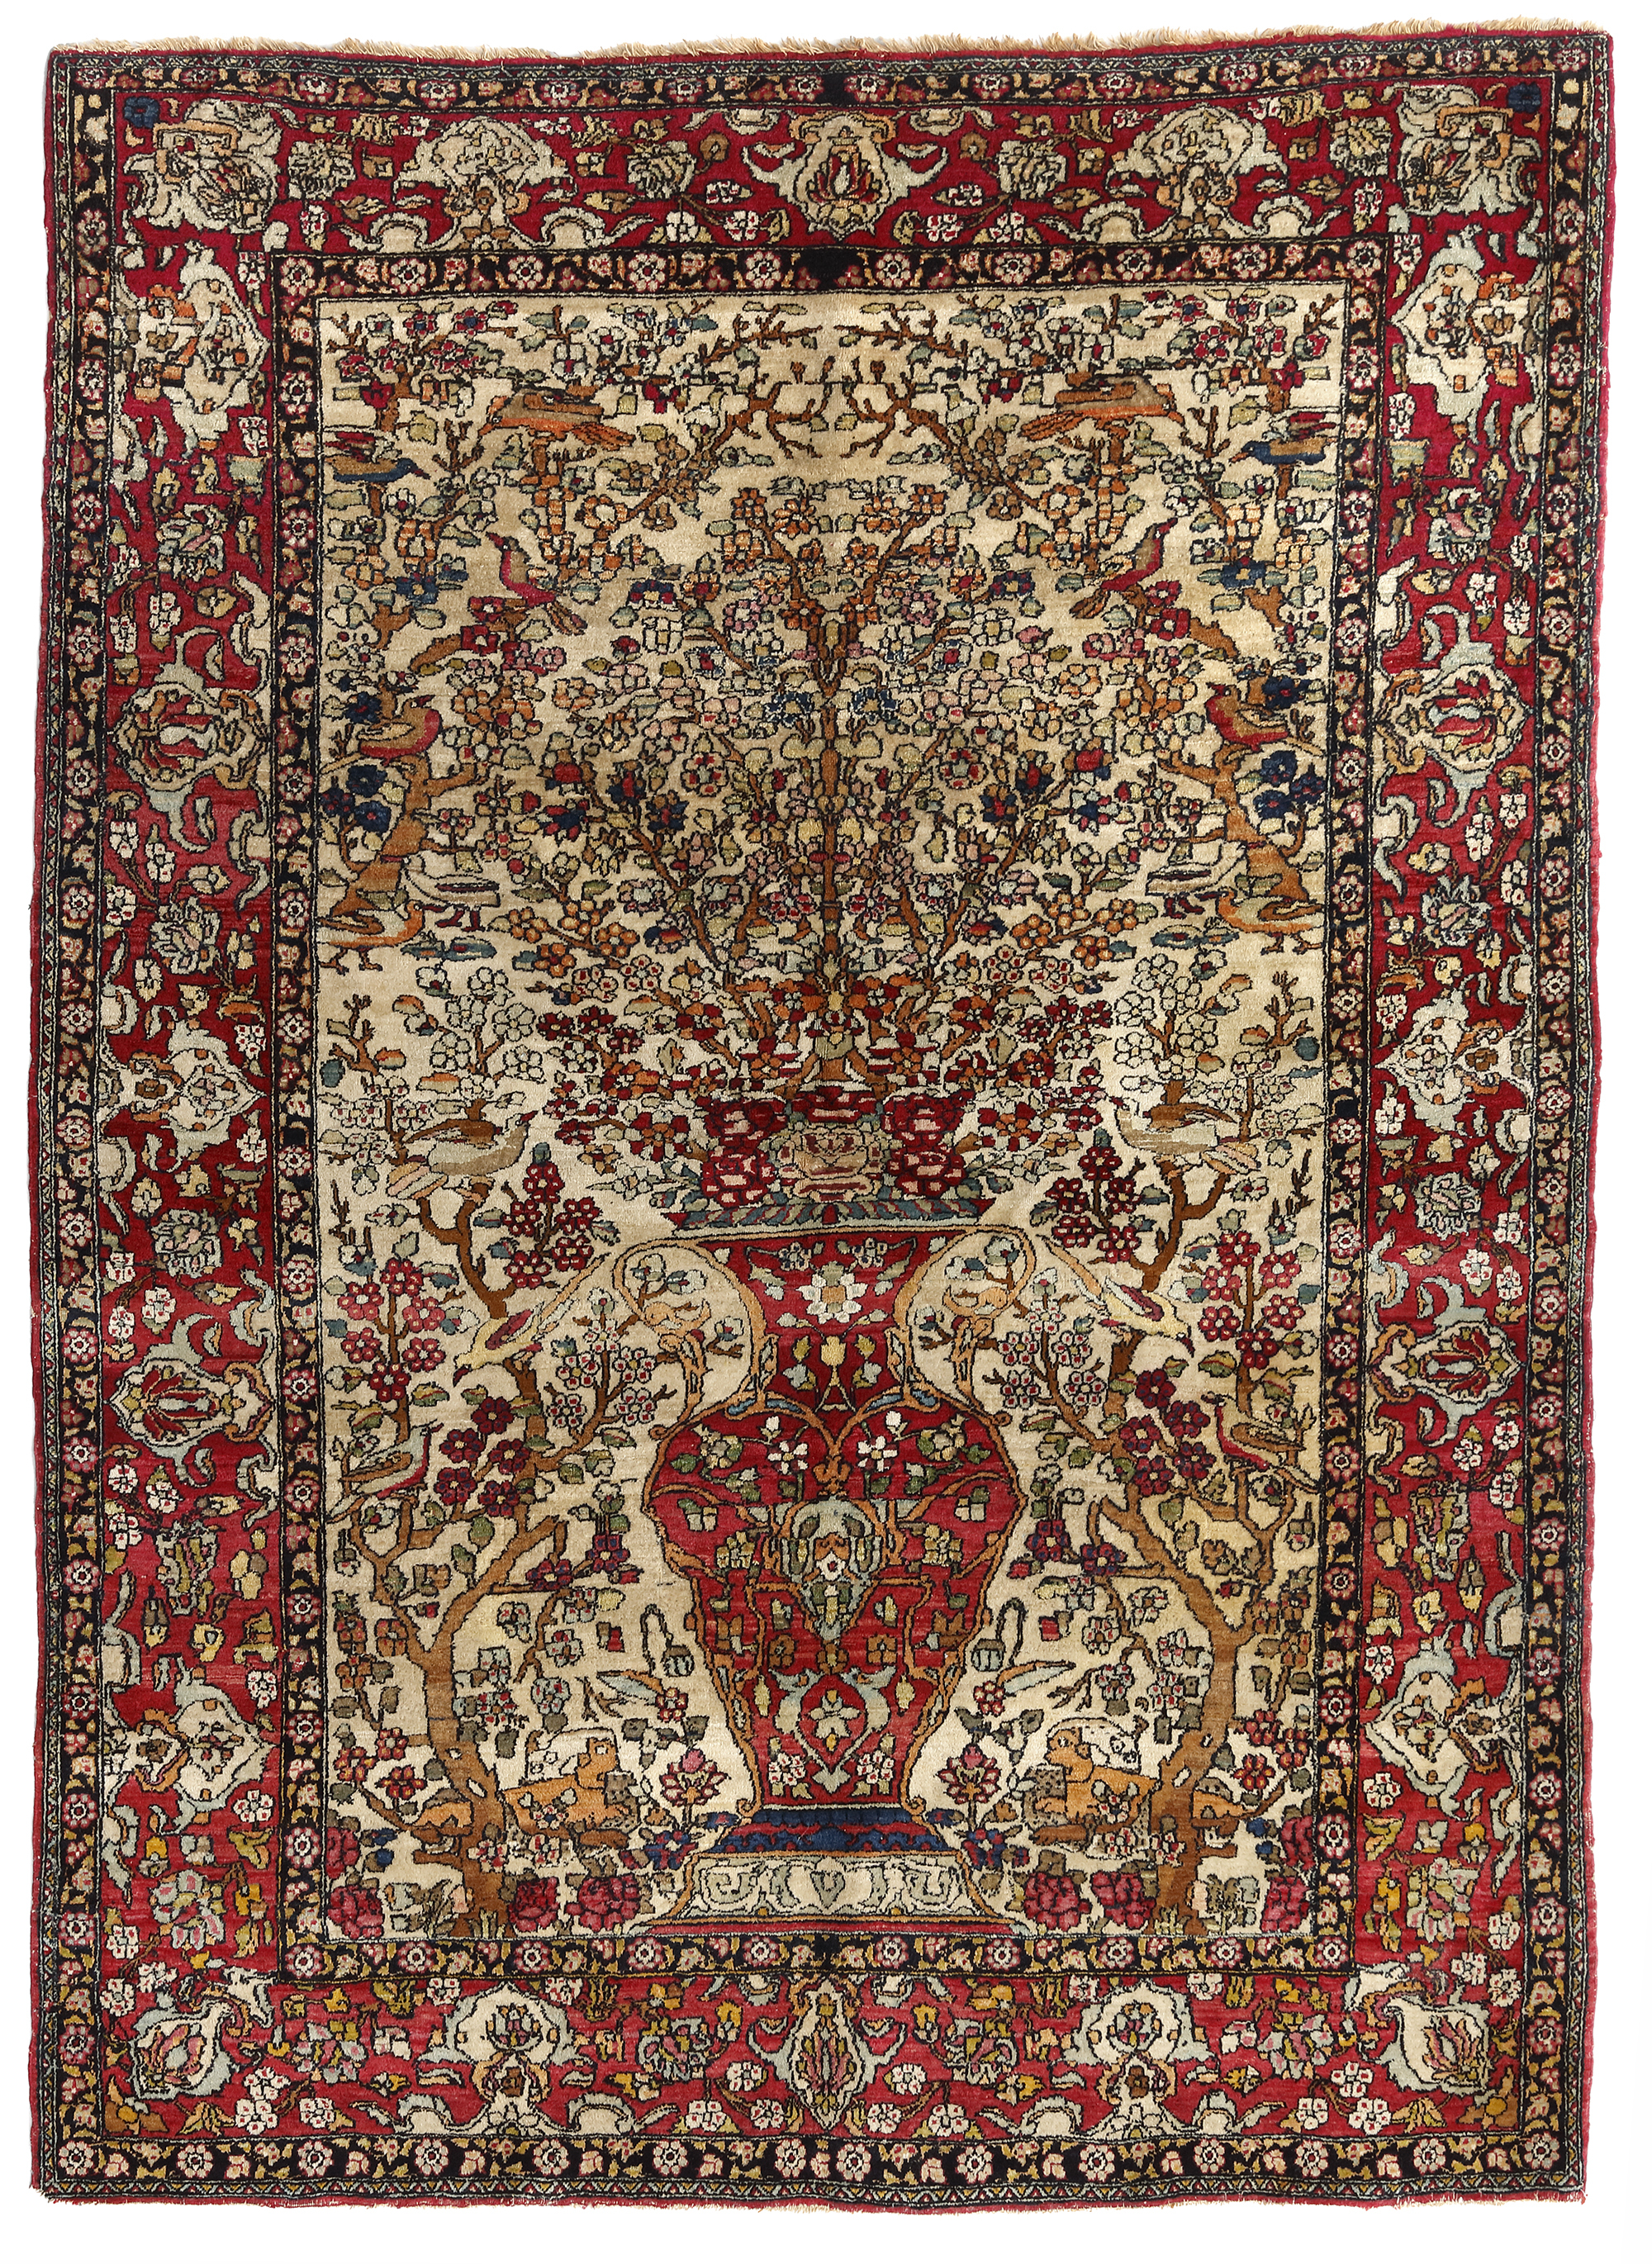 Iranian Carpets: Art, Craft and History (英語) ハードカバー 1978 